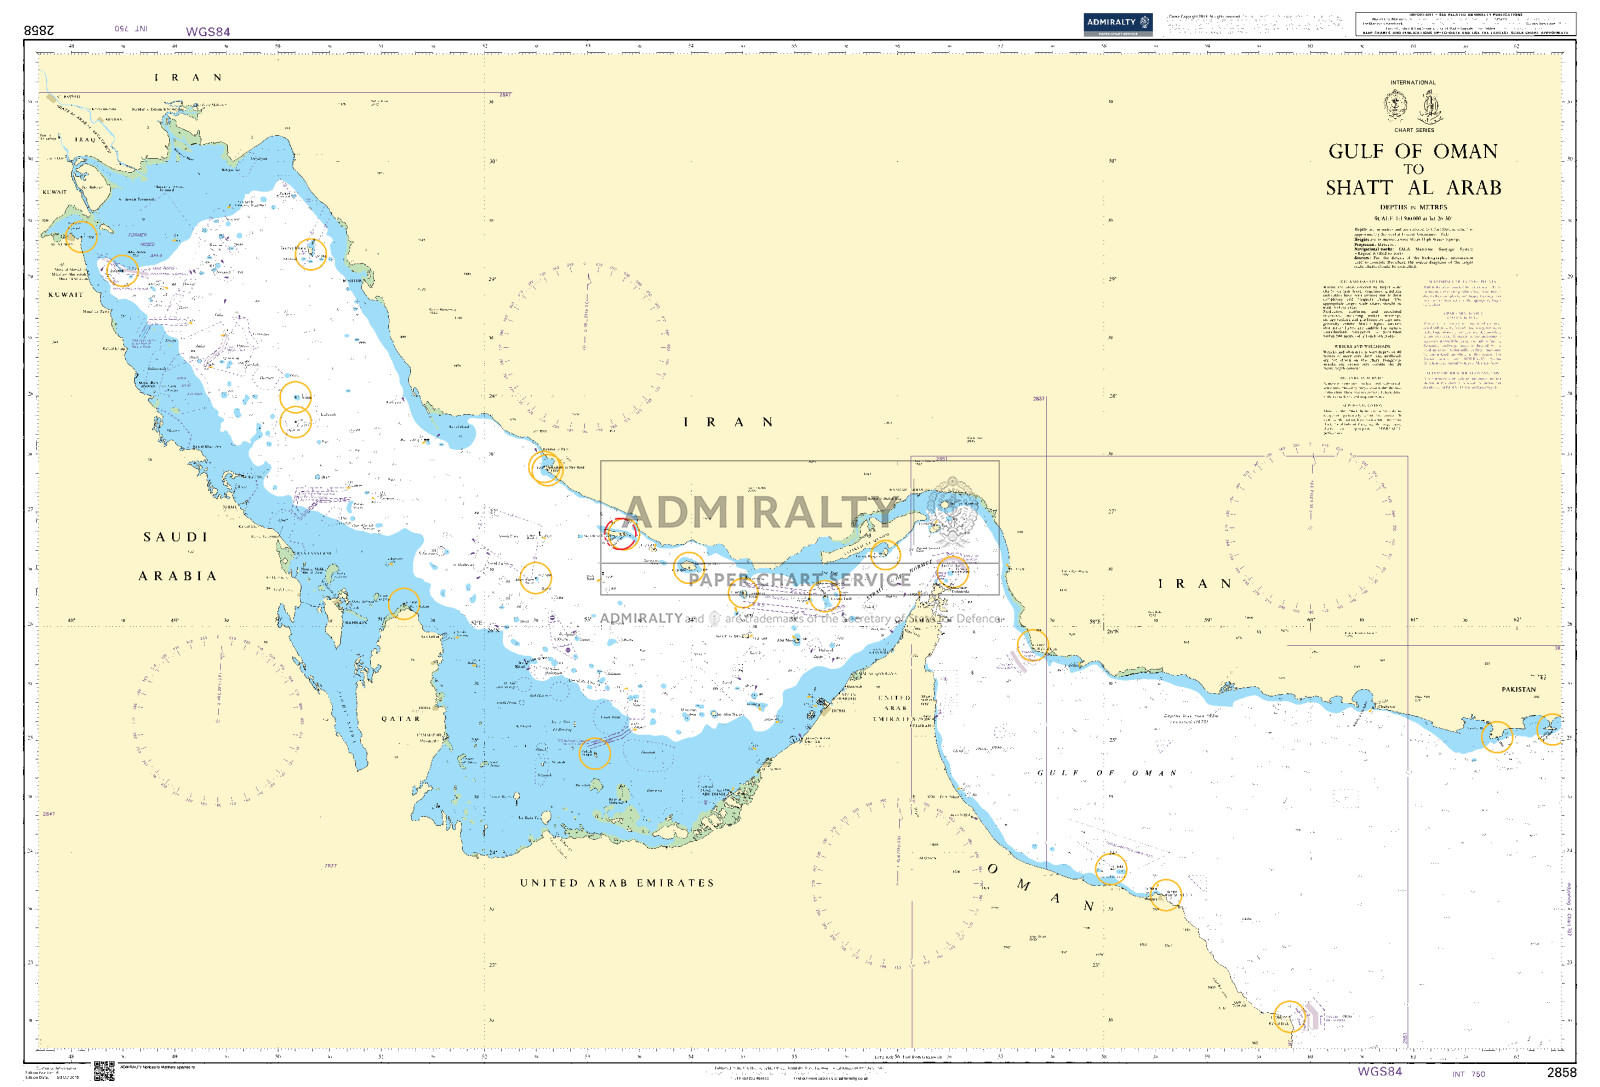 Gulf of Oman to Shatt al Arab. UKHO2858